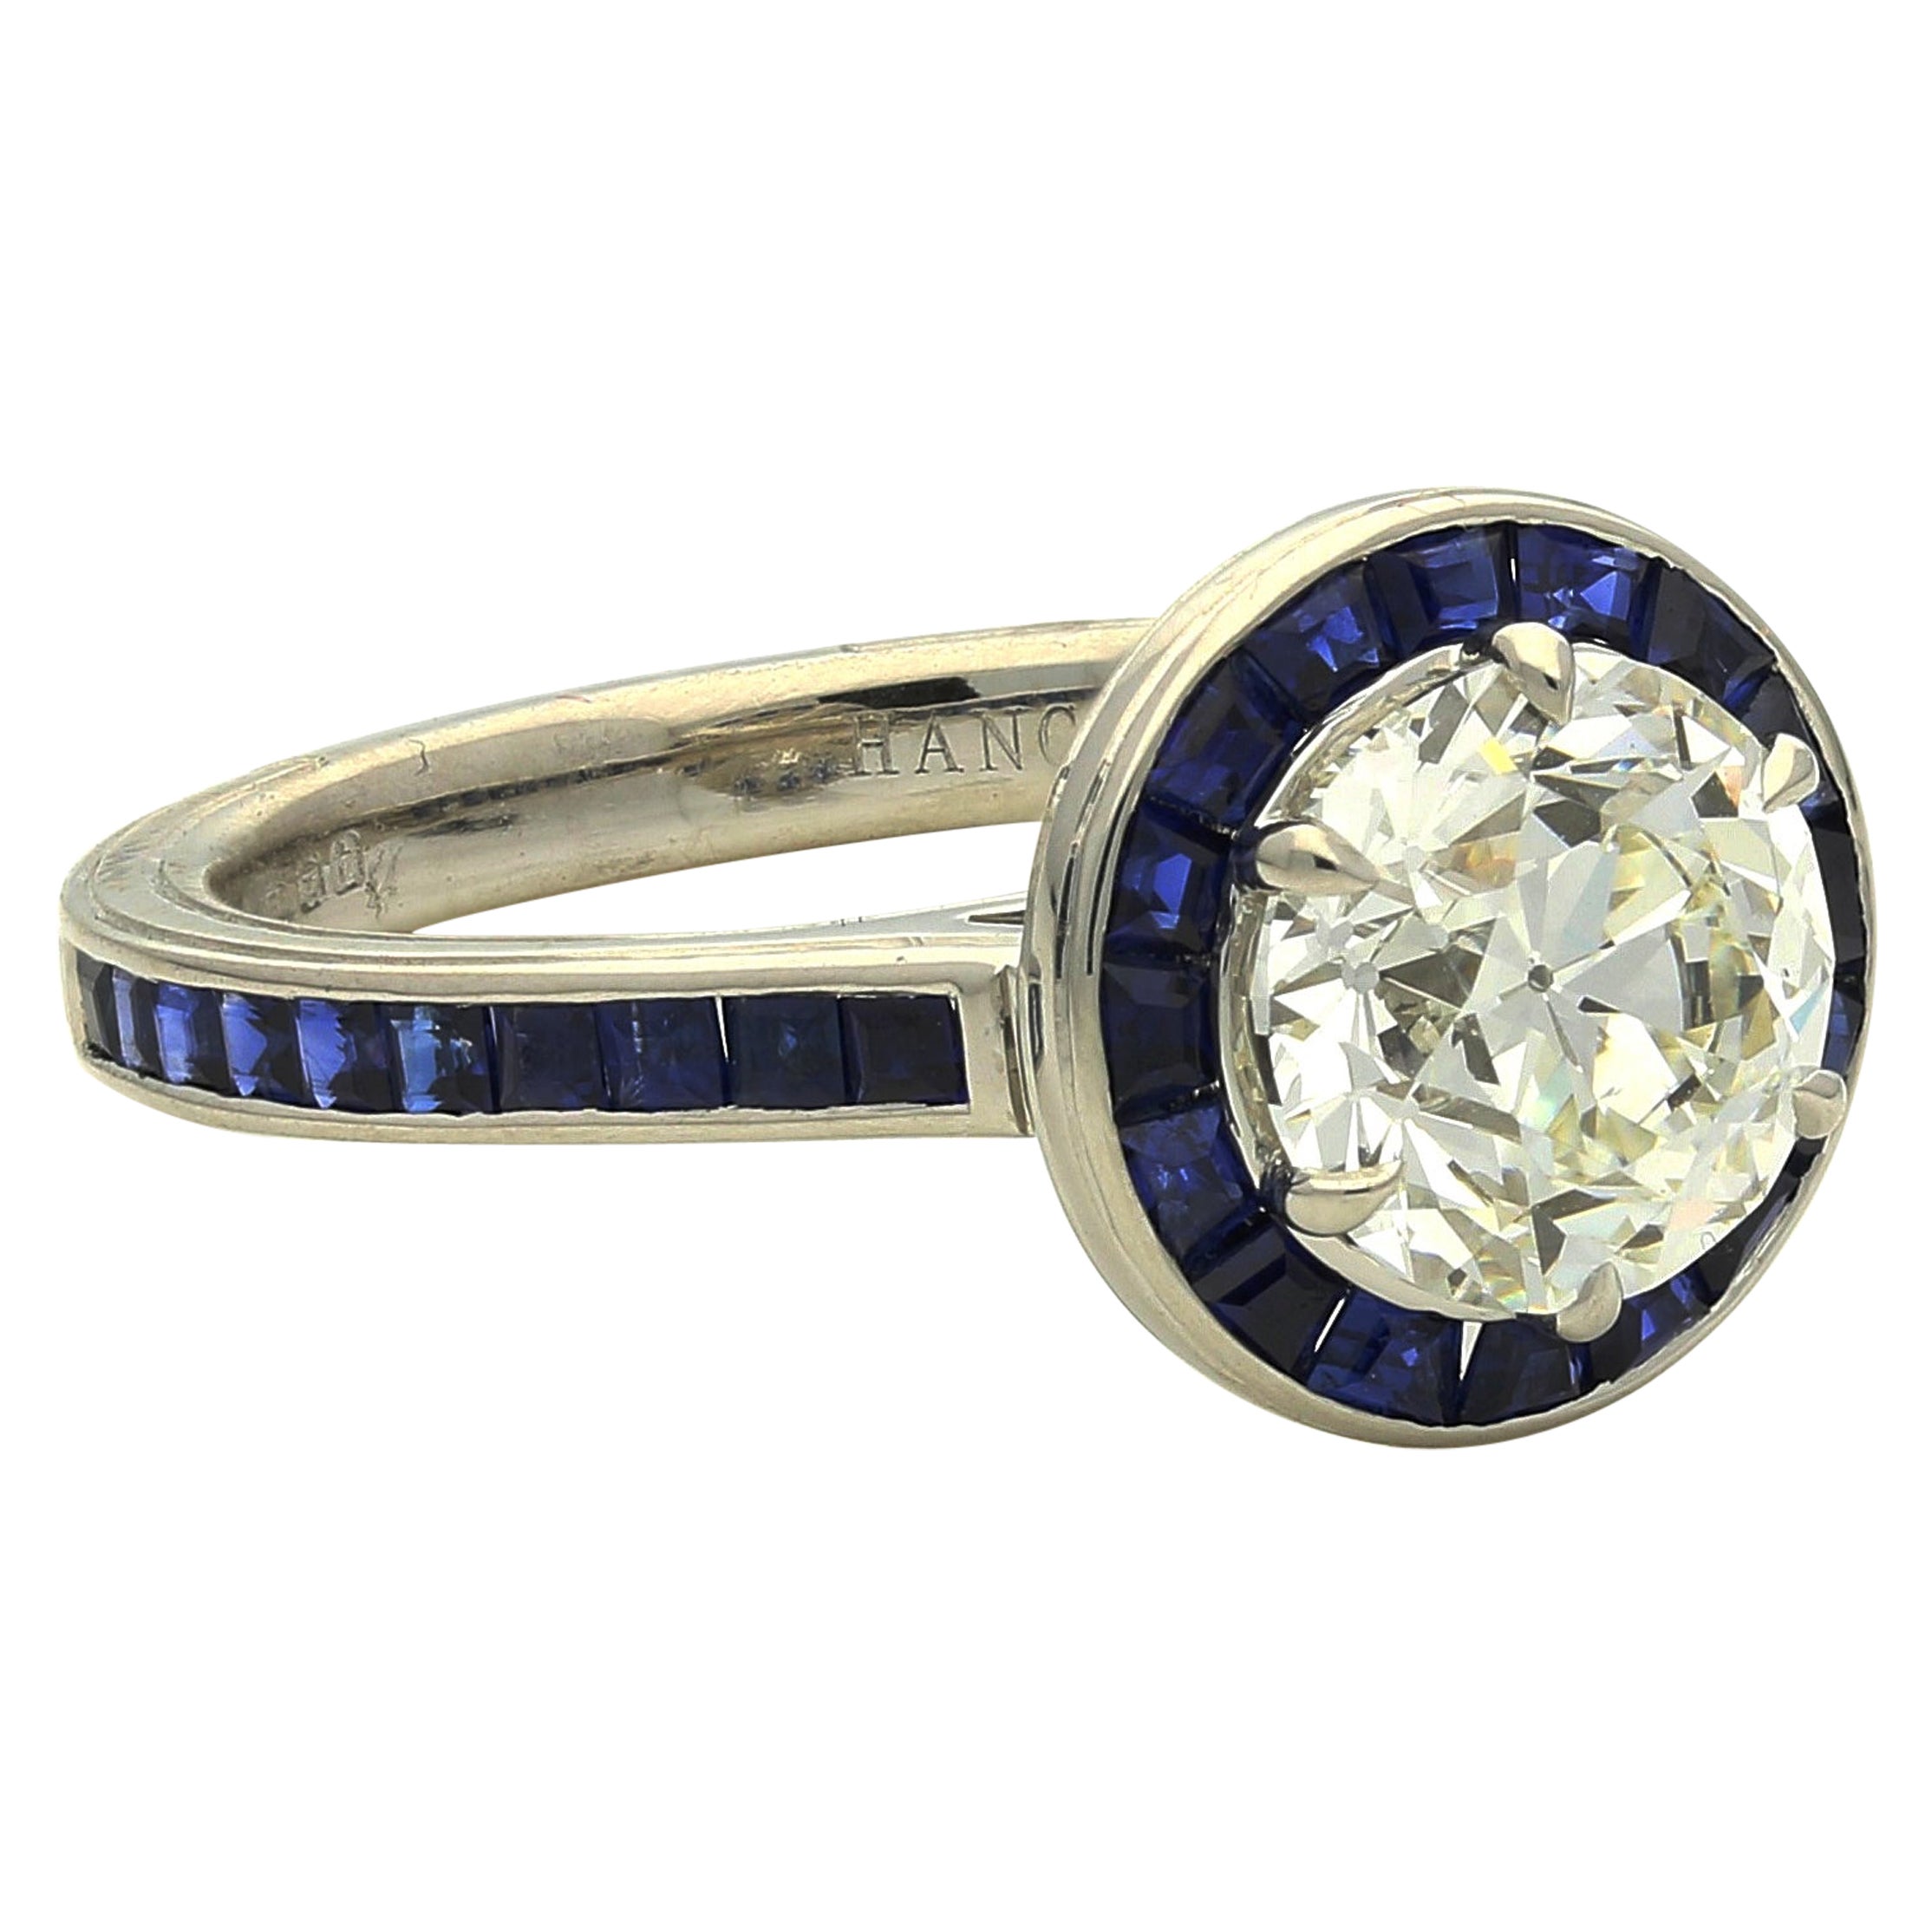 Hancocks Contemporary 2.02ct Old Cut Diamond Calibre Cut Sapphire Halo Ring (bague à halo)